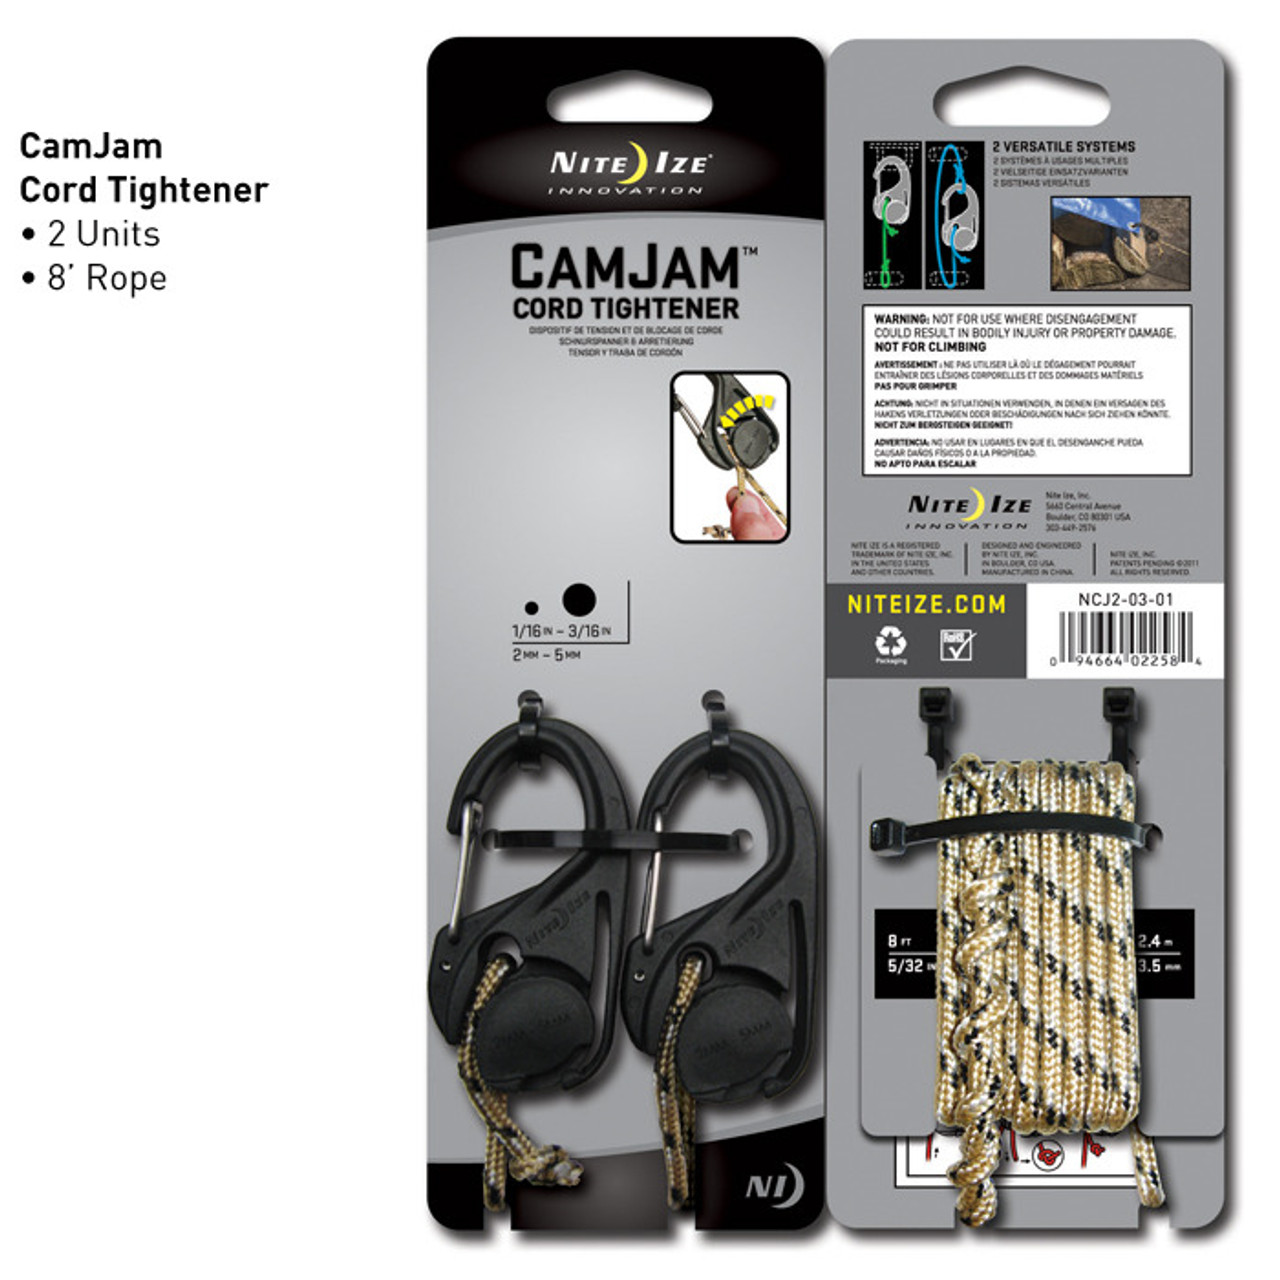 Nite Ize CamJam Cord Tightener Carabiner With Rope (2 Pack) 